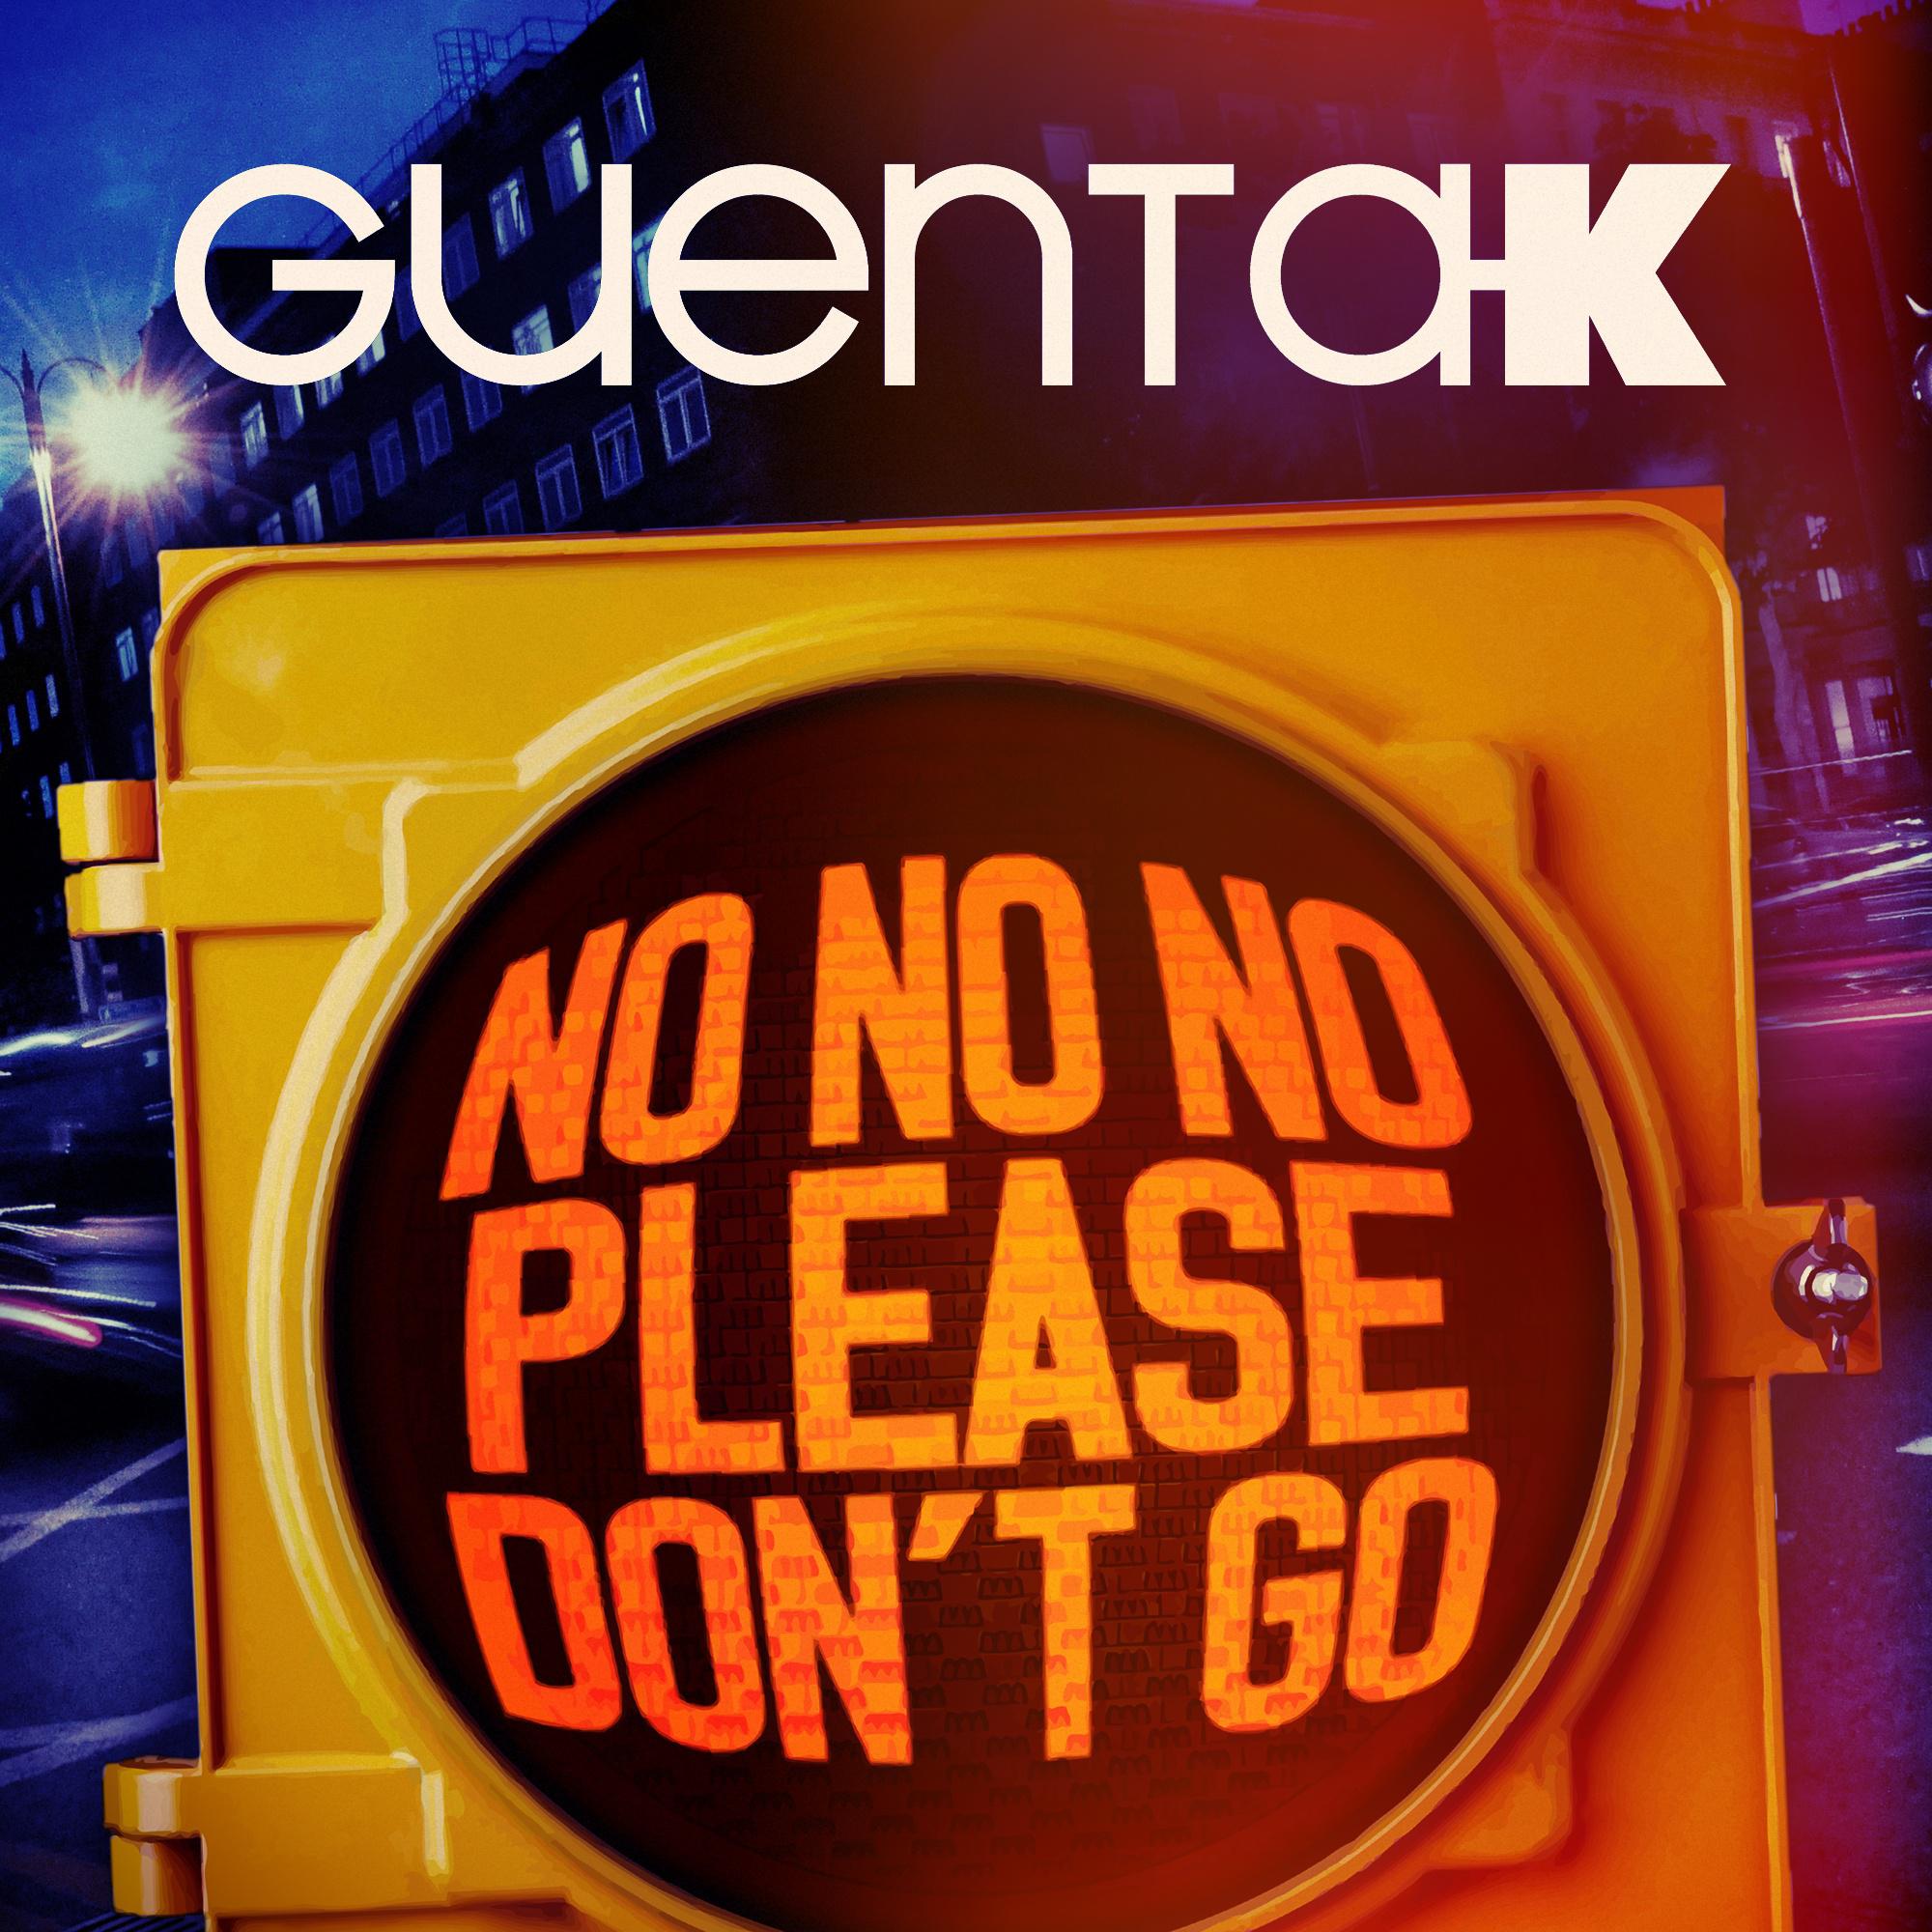 Guenta K - No No No (Please Don't Go) (Bahoe Remix)